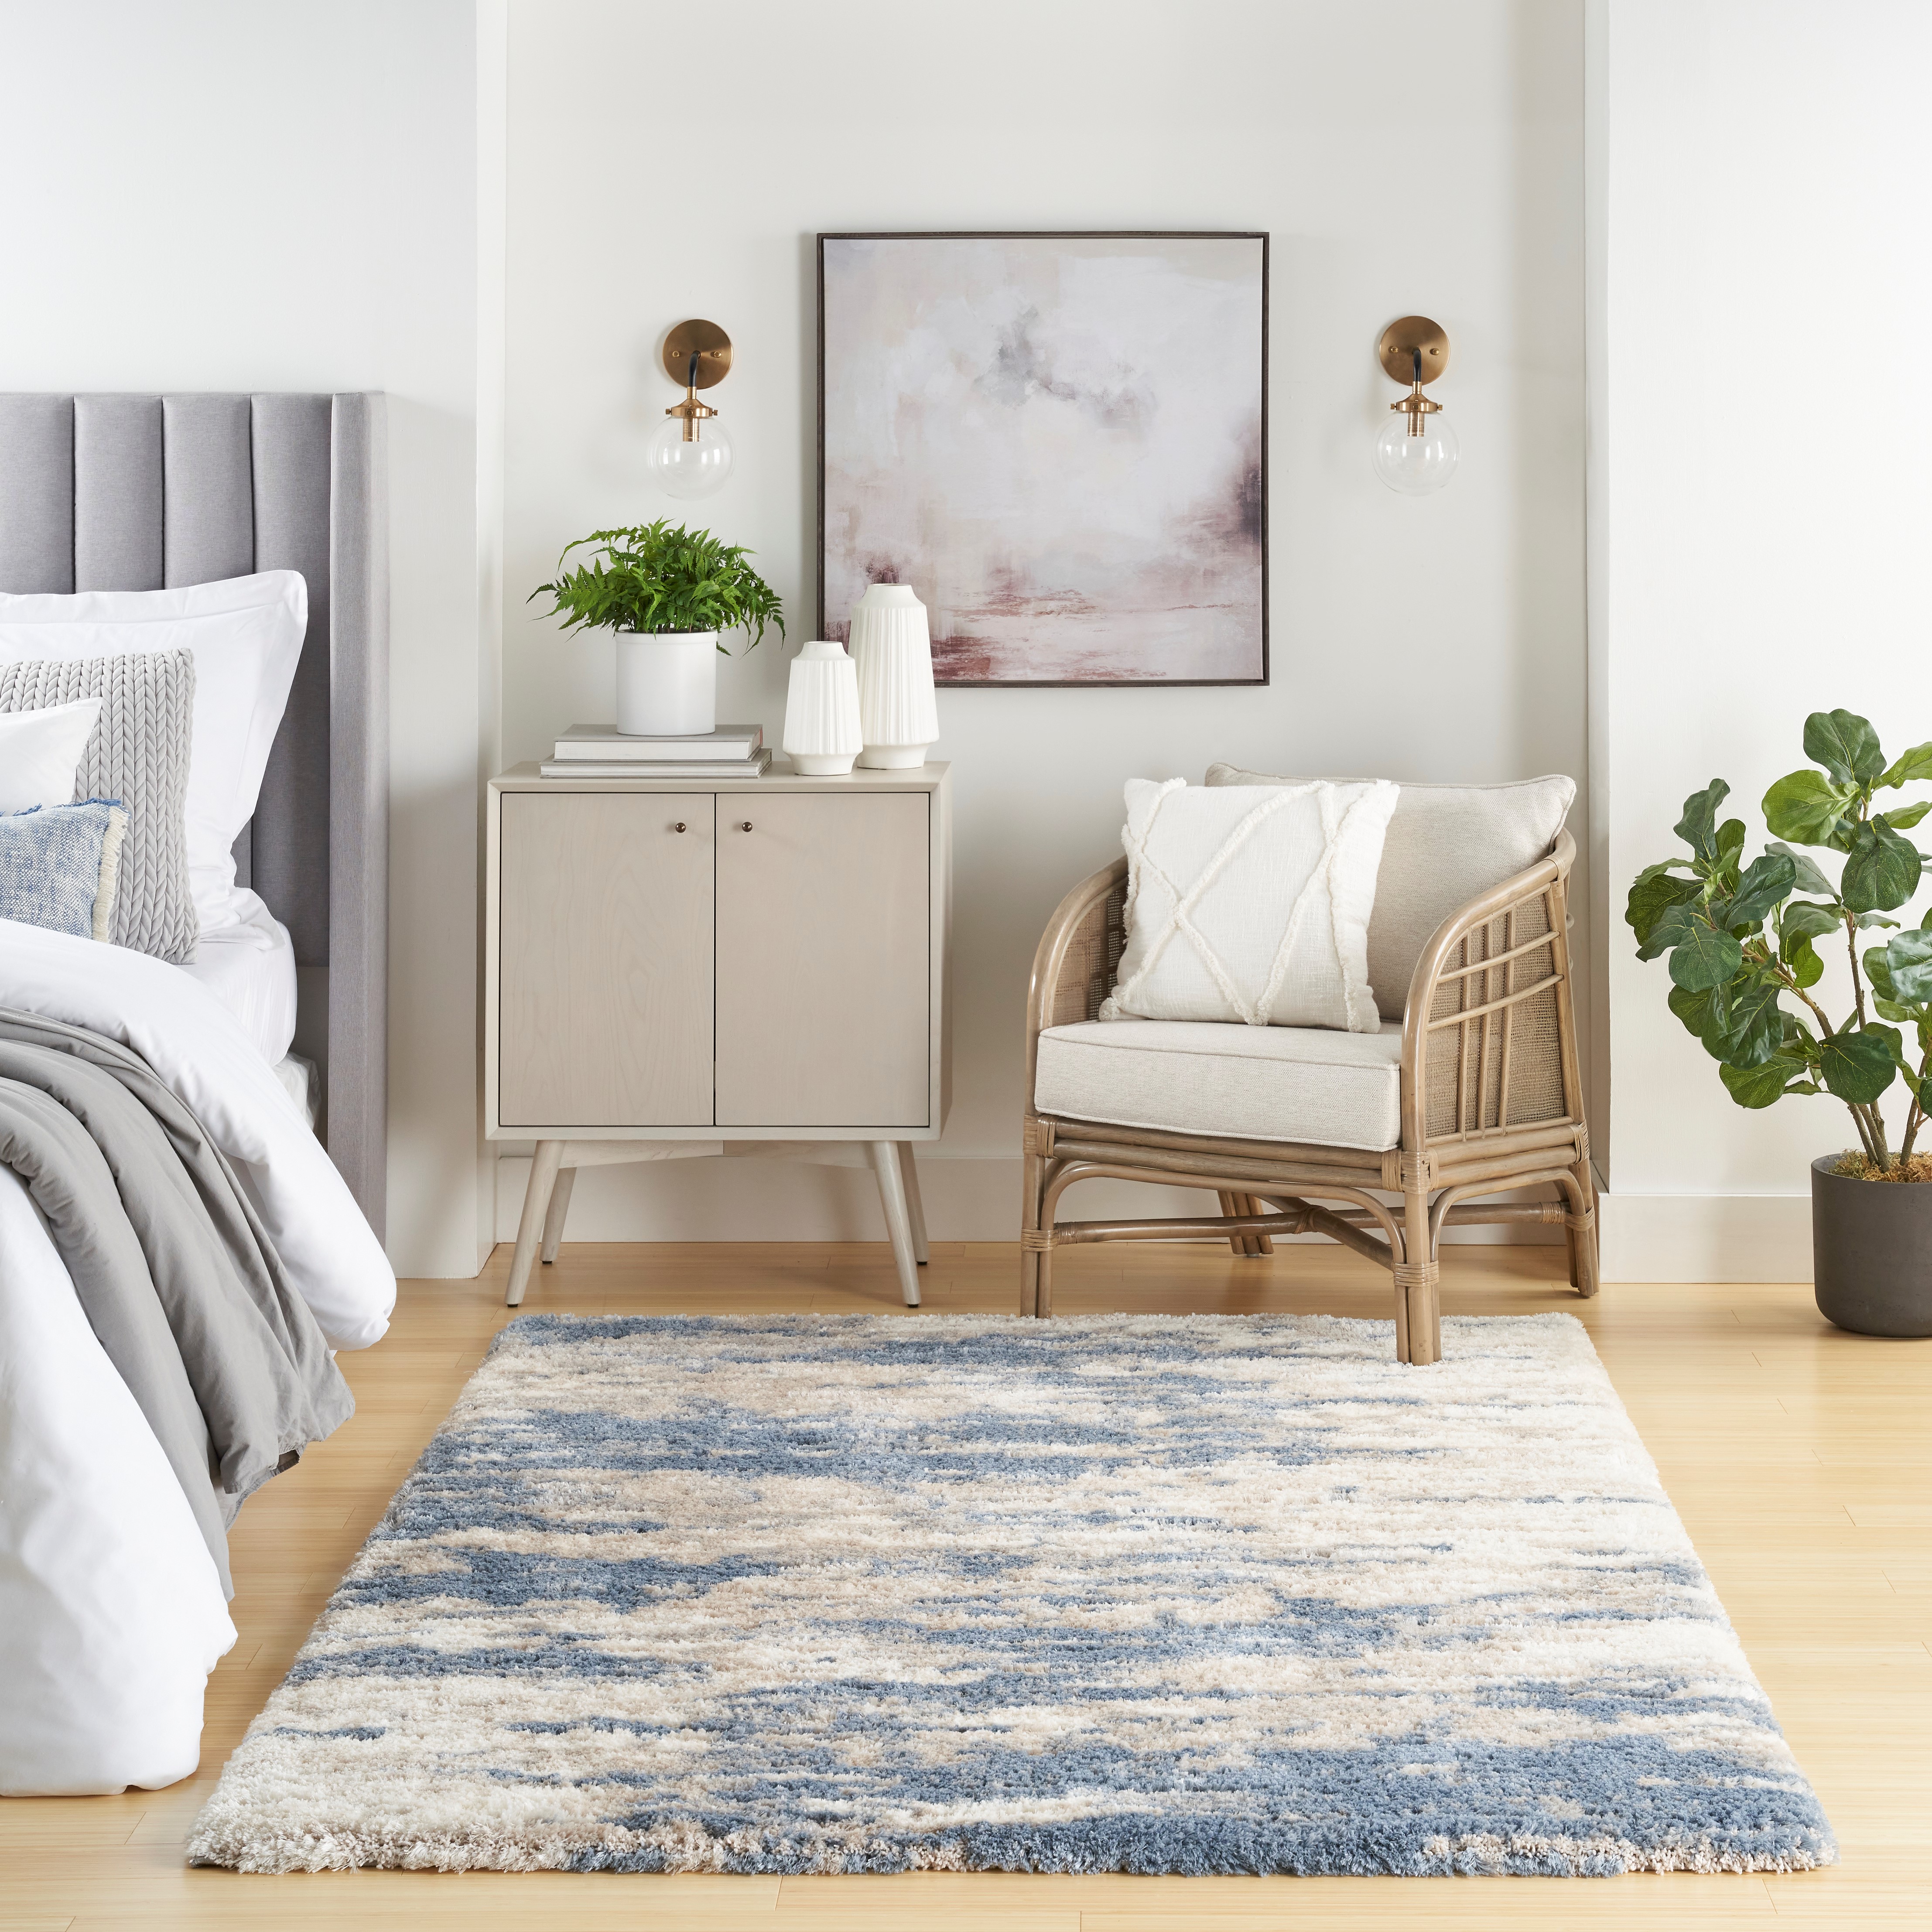 Area Rug in bedroom scene. White and light blue color scheme.